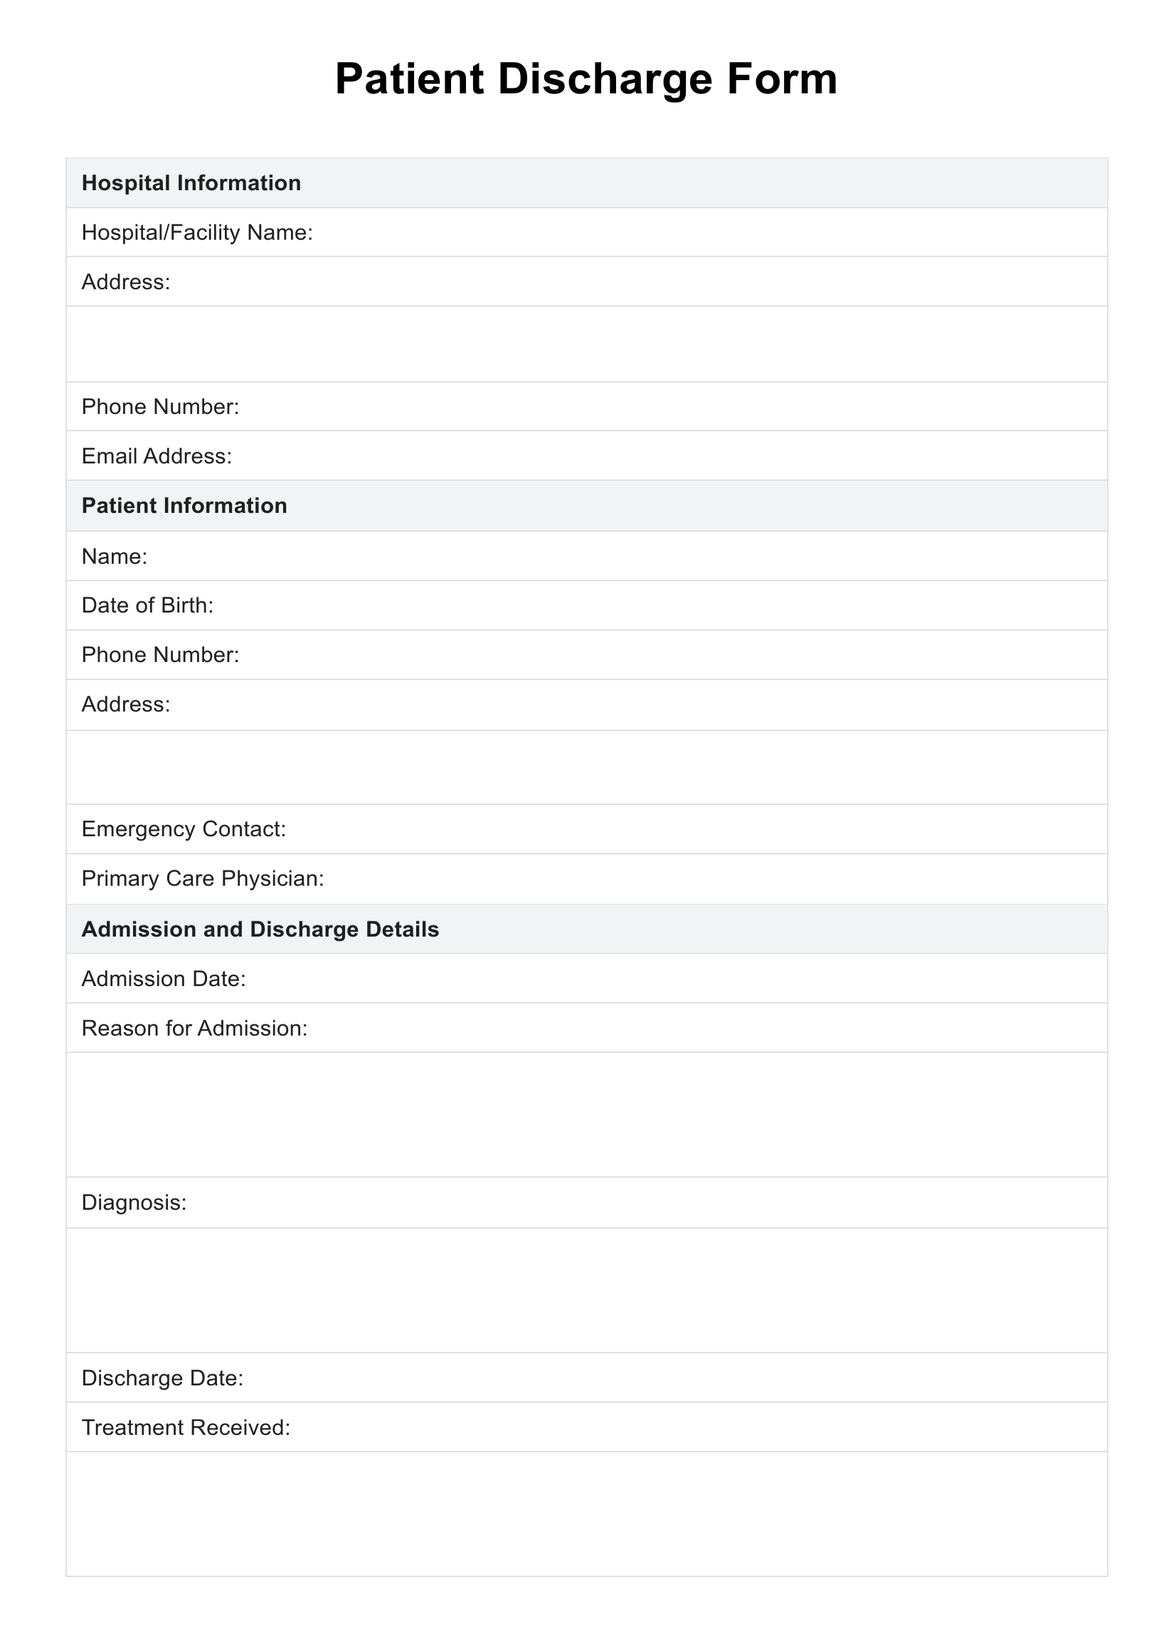 Patient Discharge Form PDF Example